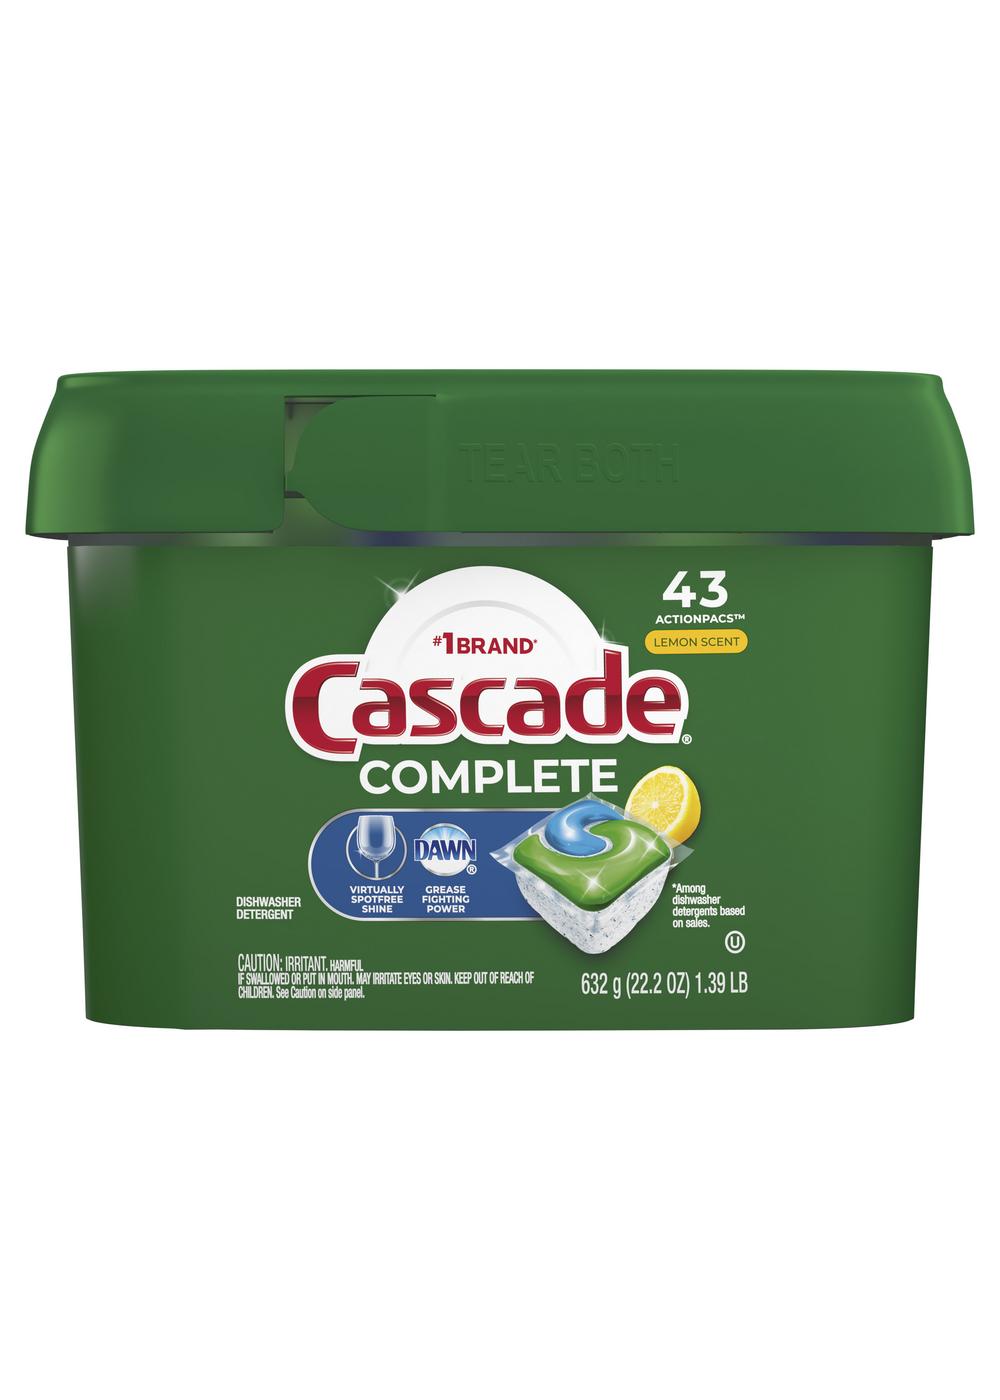 Cascade Complete Lemon Scent Dishwasher Detergent ActionPacs; image 2 of 7